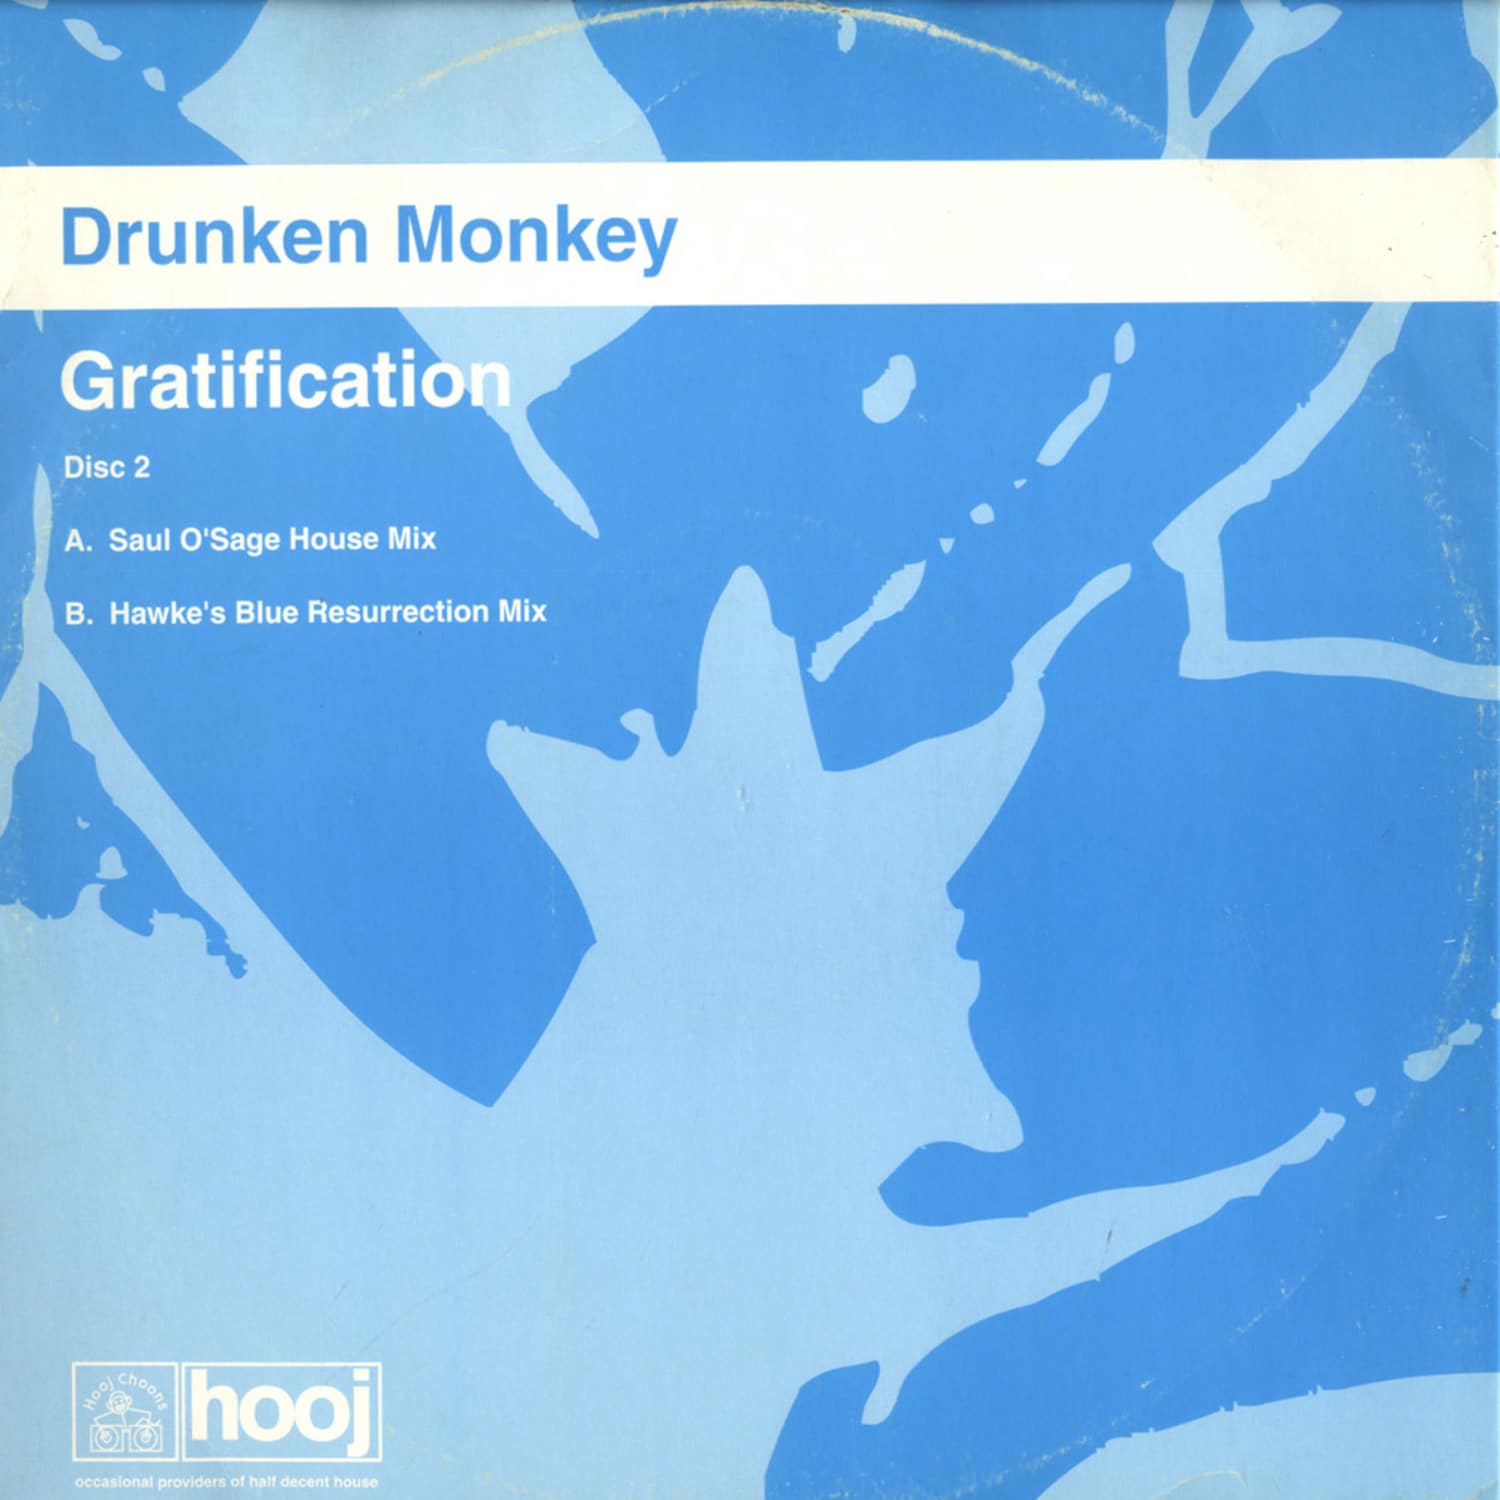 Drunken Monkey - GRATIFICATION